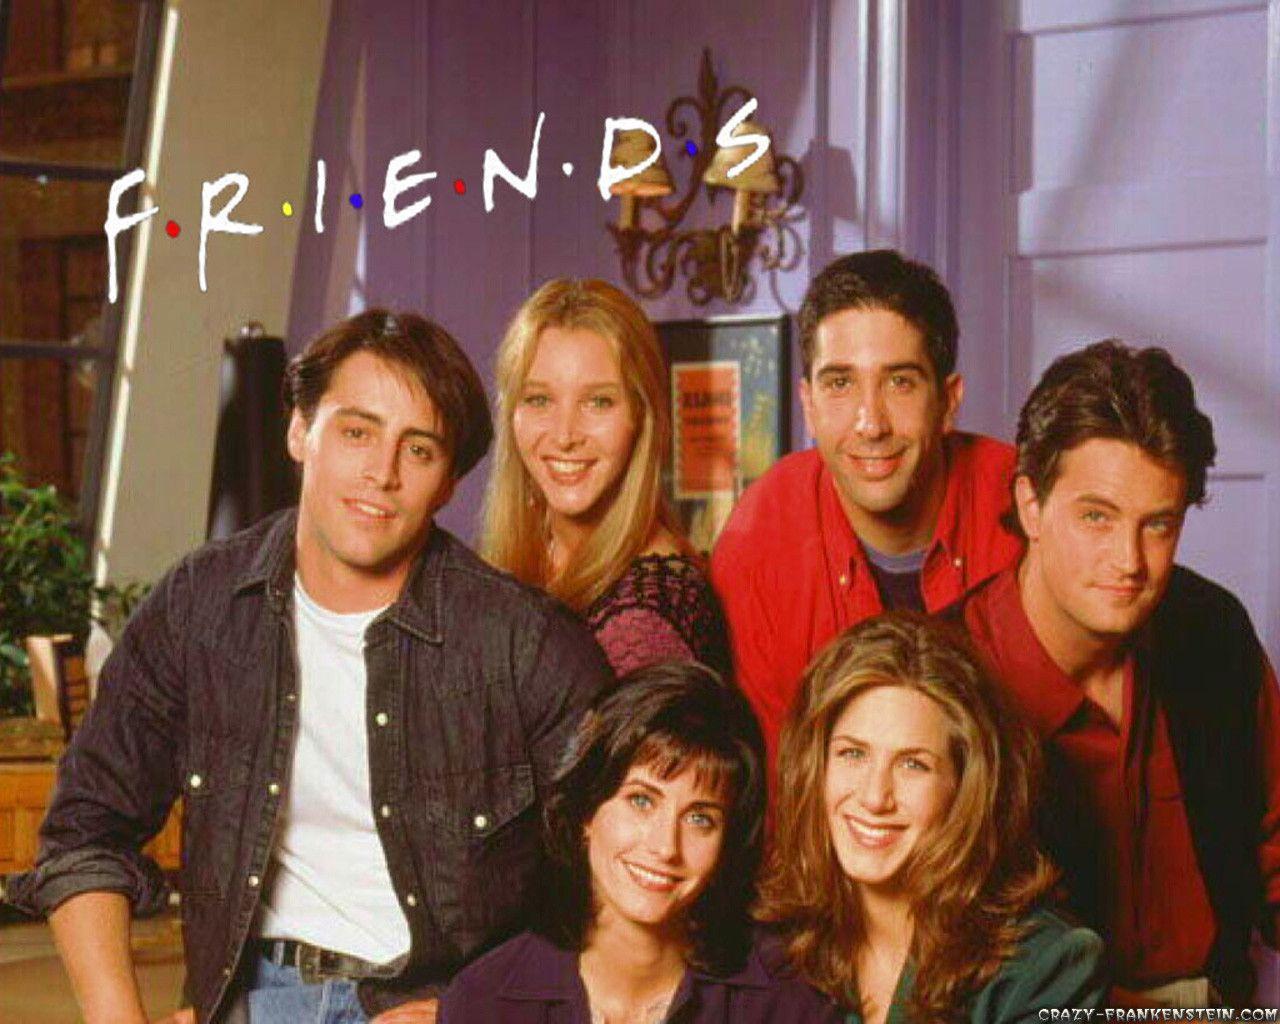 friends season 7 download 1080p